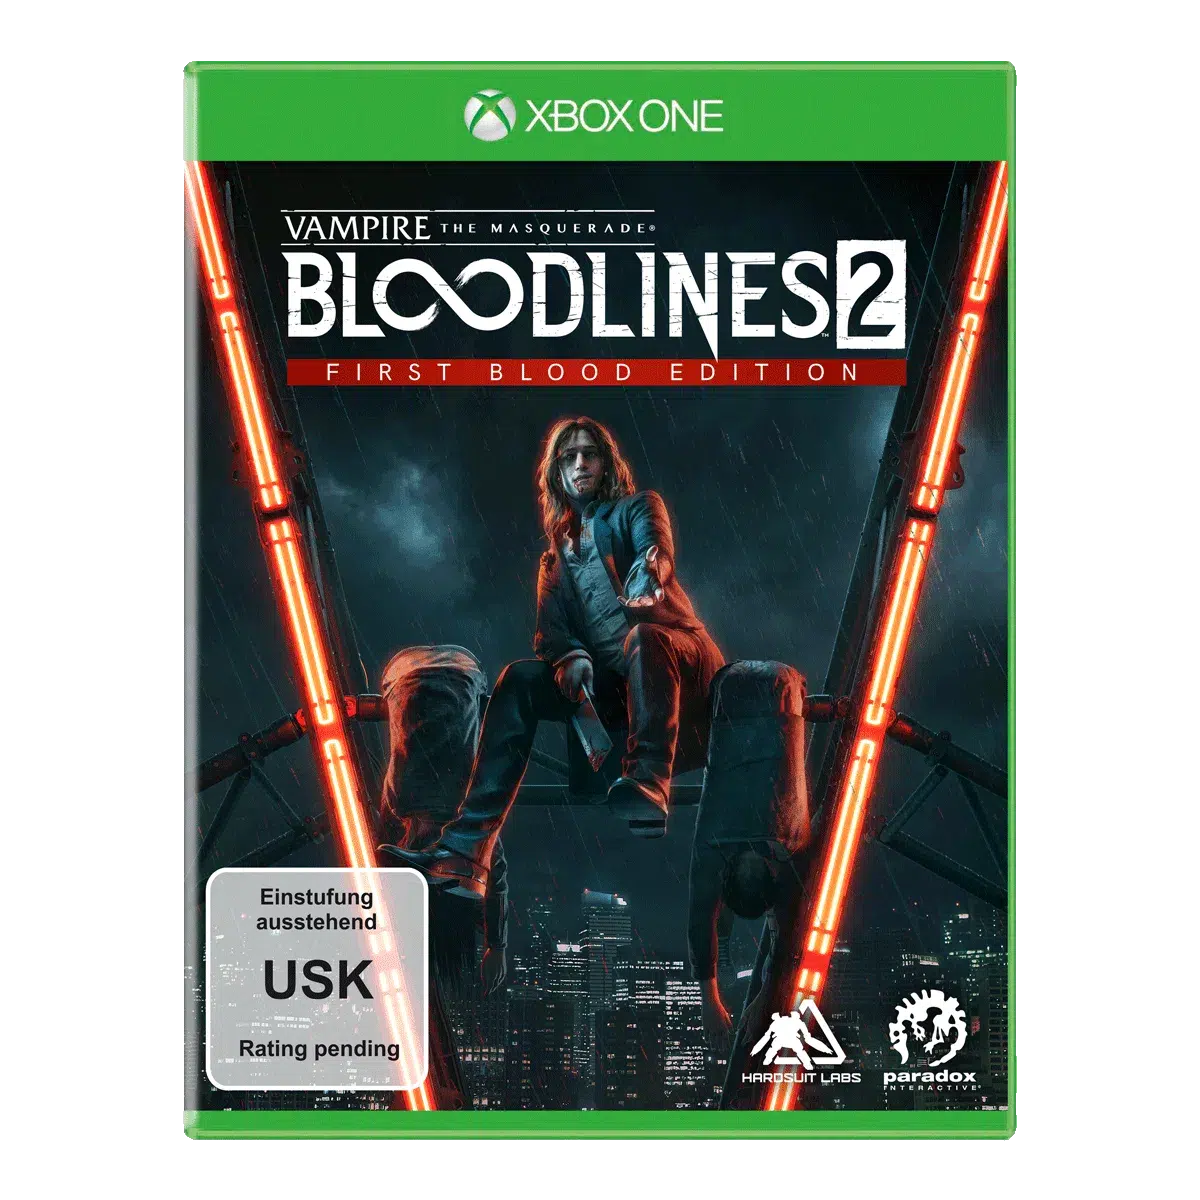 Vampire: The Masquerade Bloodlines 2 First Blood Edition (XONE) (USK)